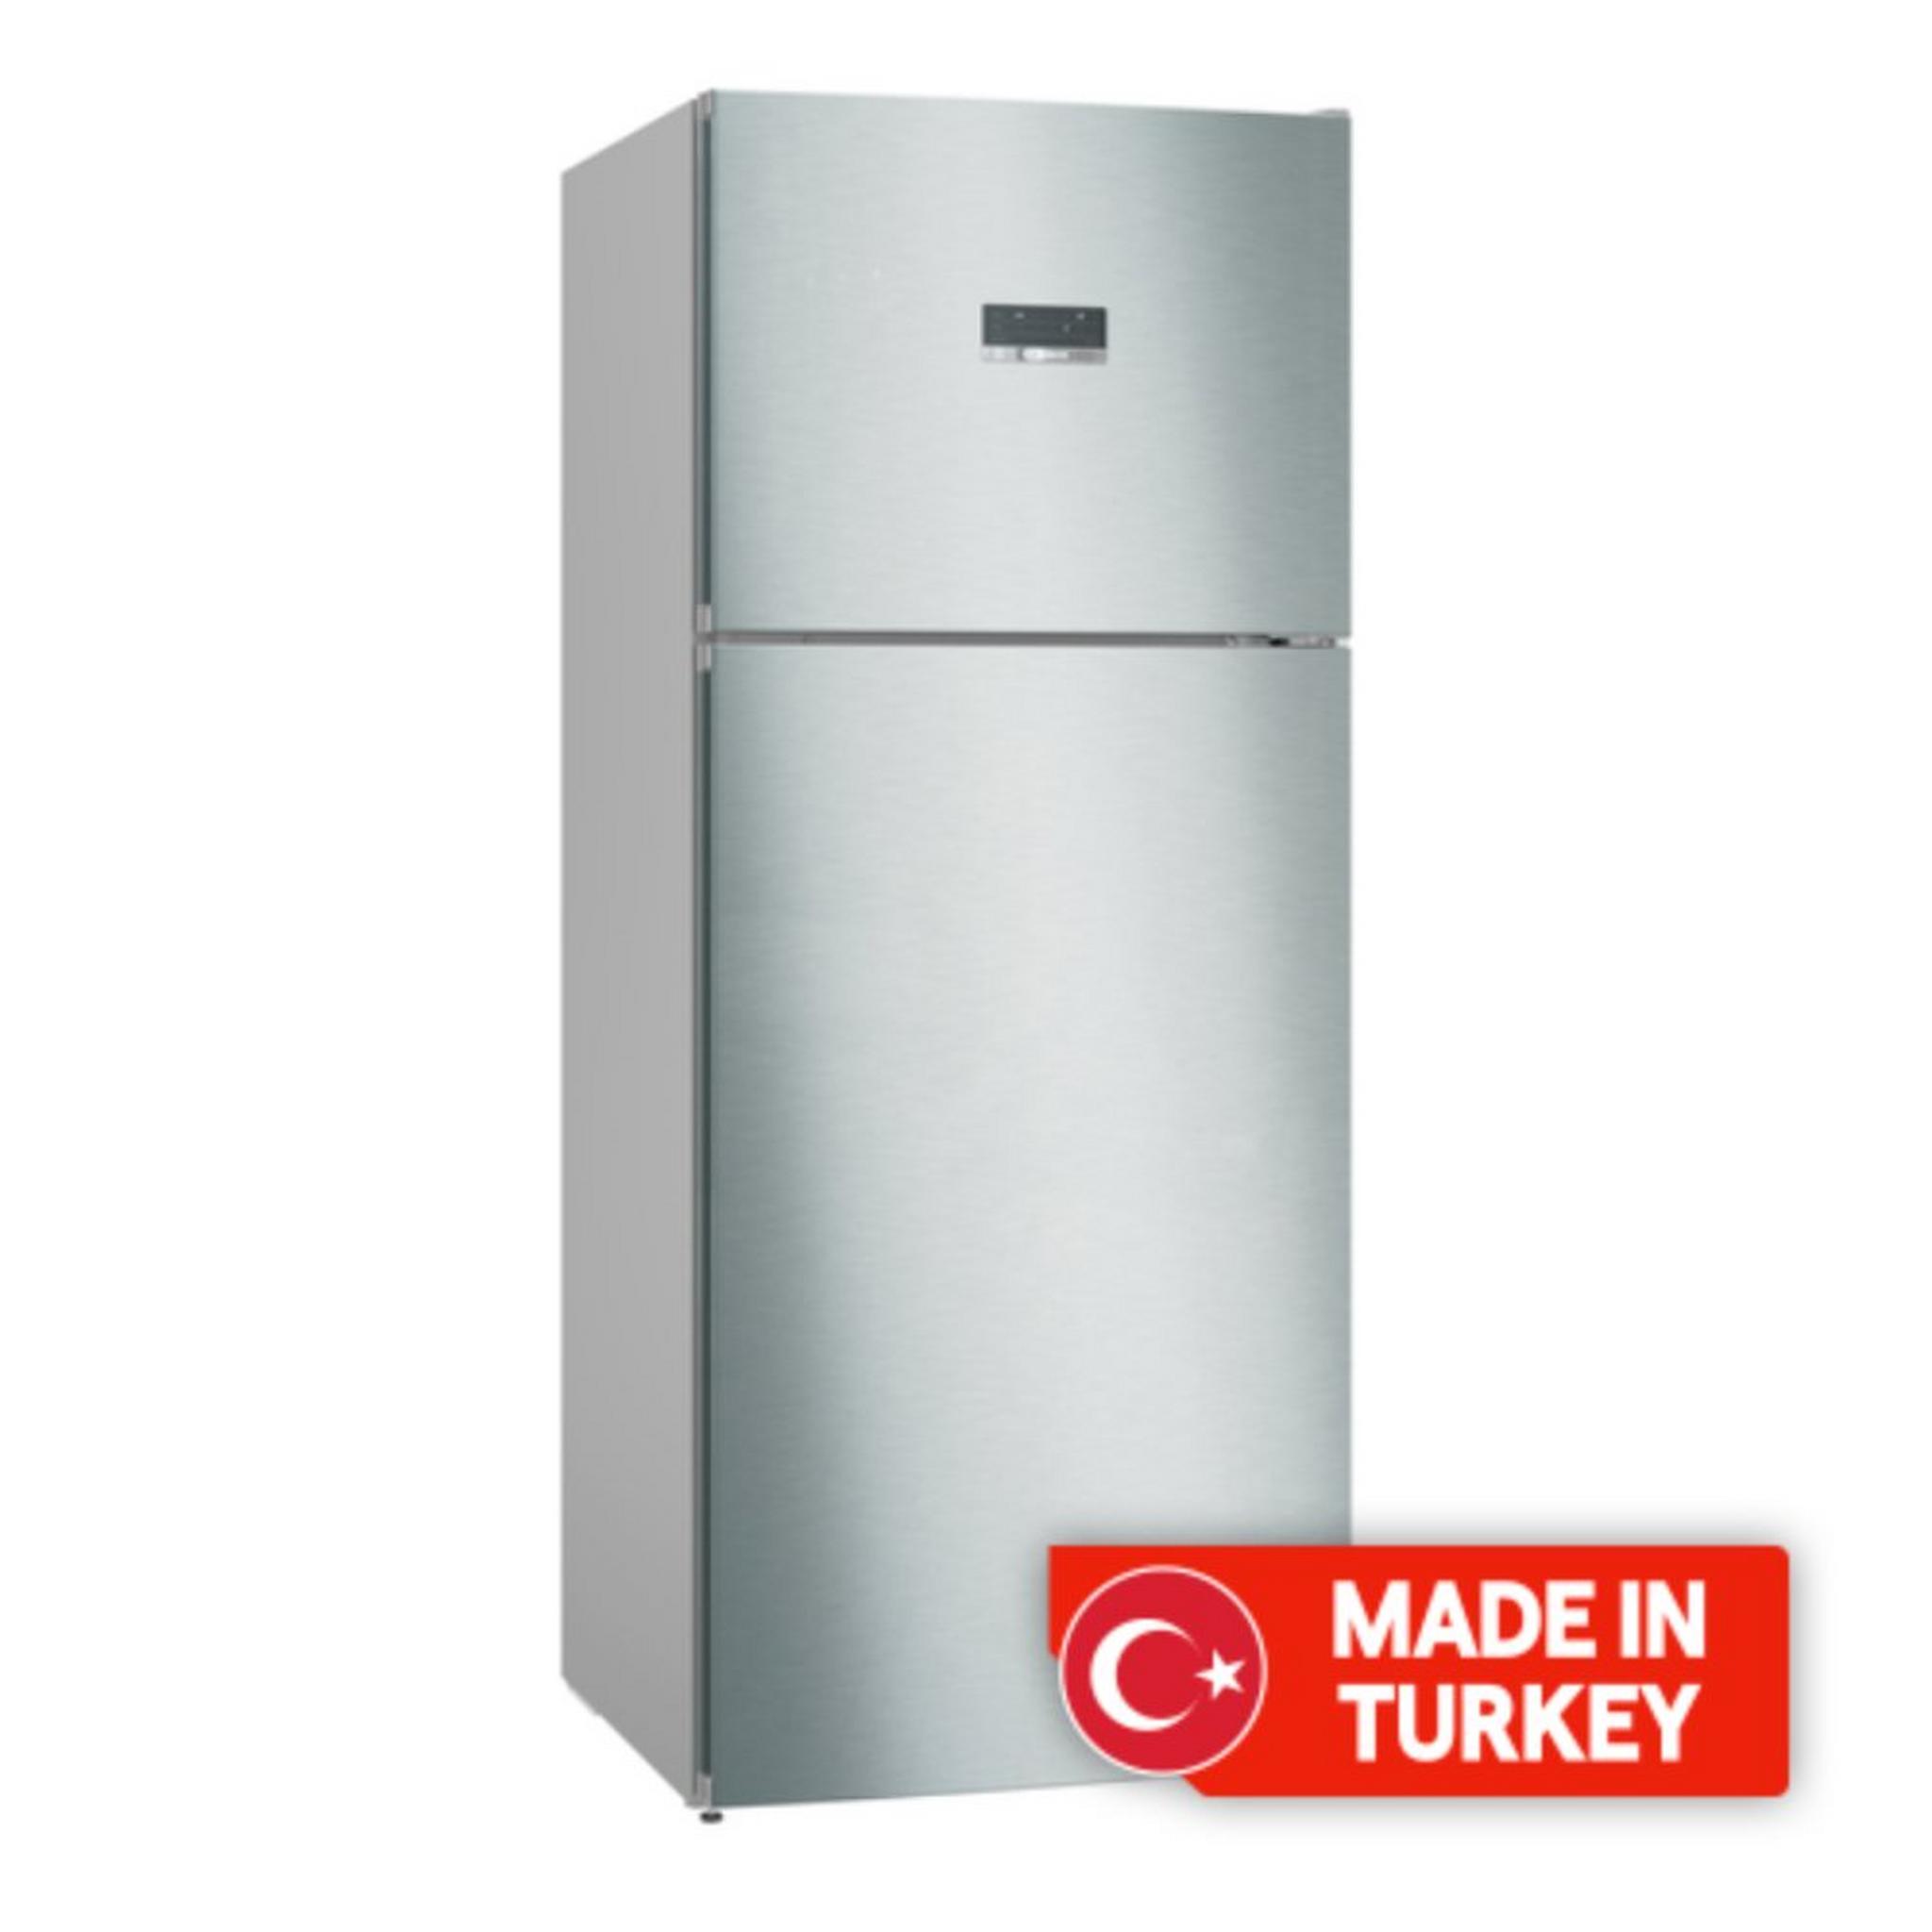 BOSCH Top Freezer Refrigerator, 21CFT, 581-Liters, KDN76XI30M - Silver